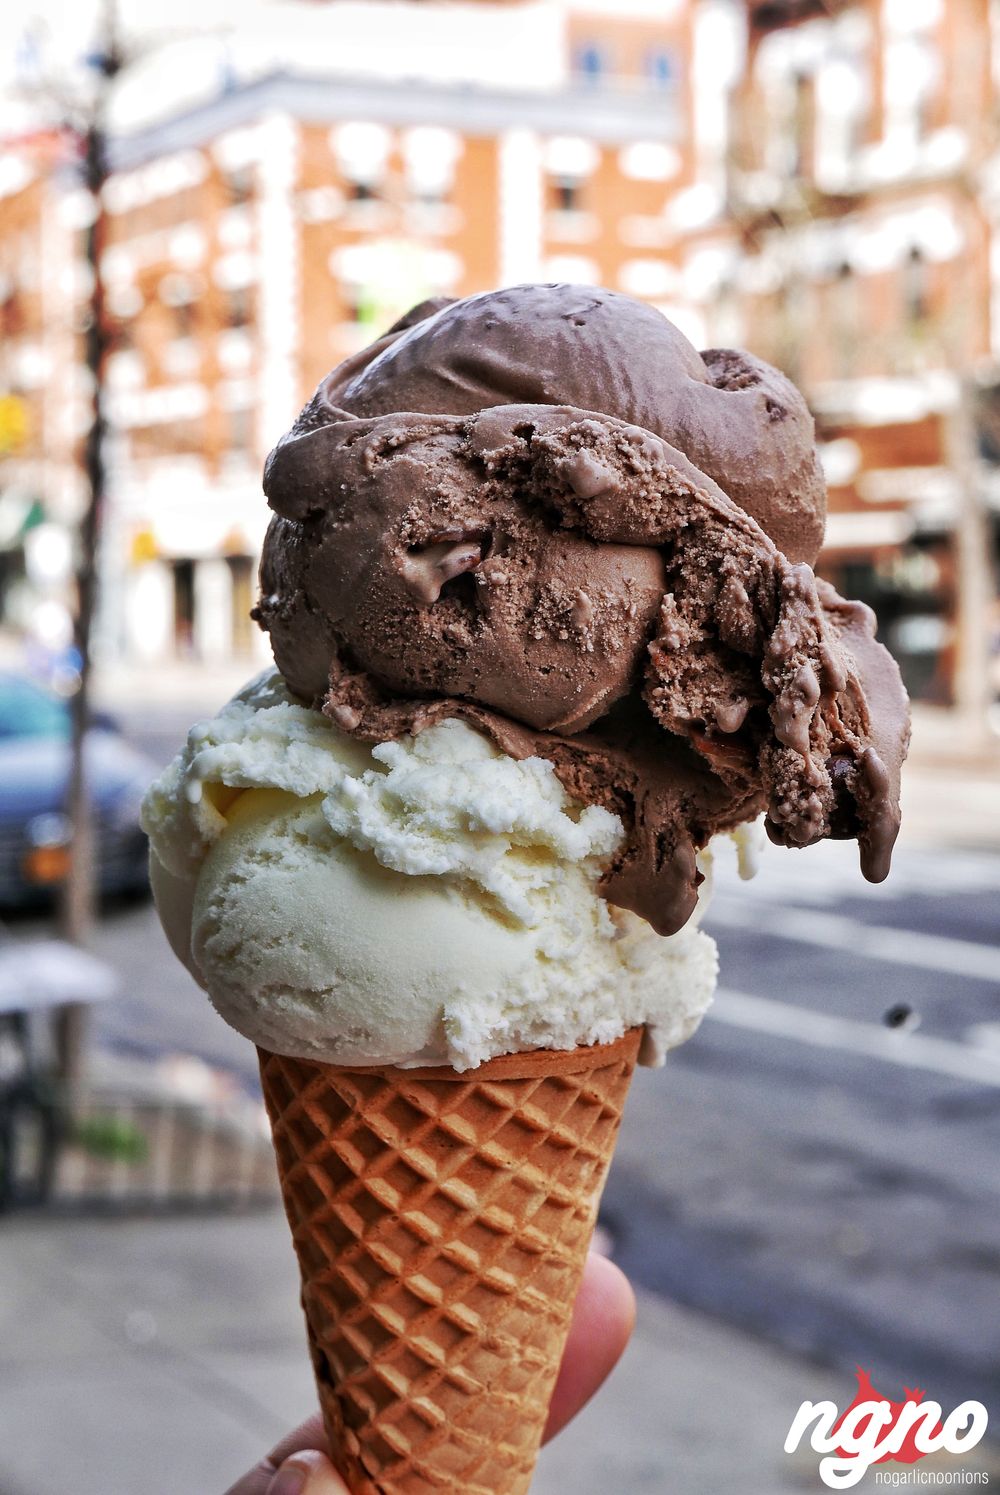 mikey-likes-it-ice-cream-new-york92017-04-20-01-37-222017-06-24-06-05-35